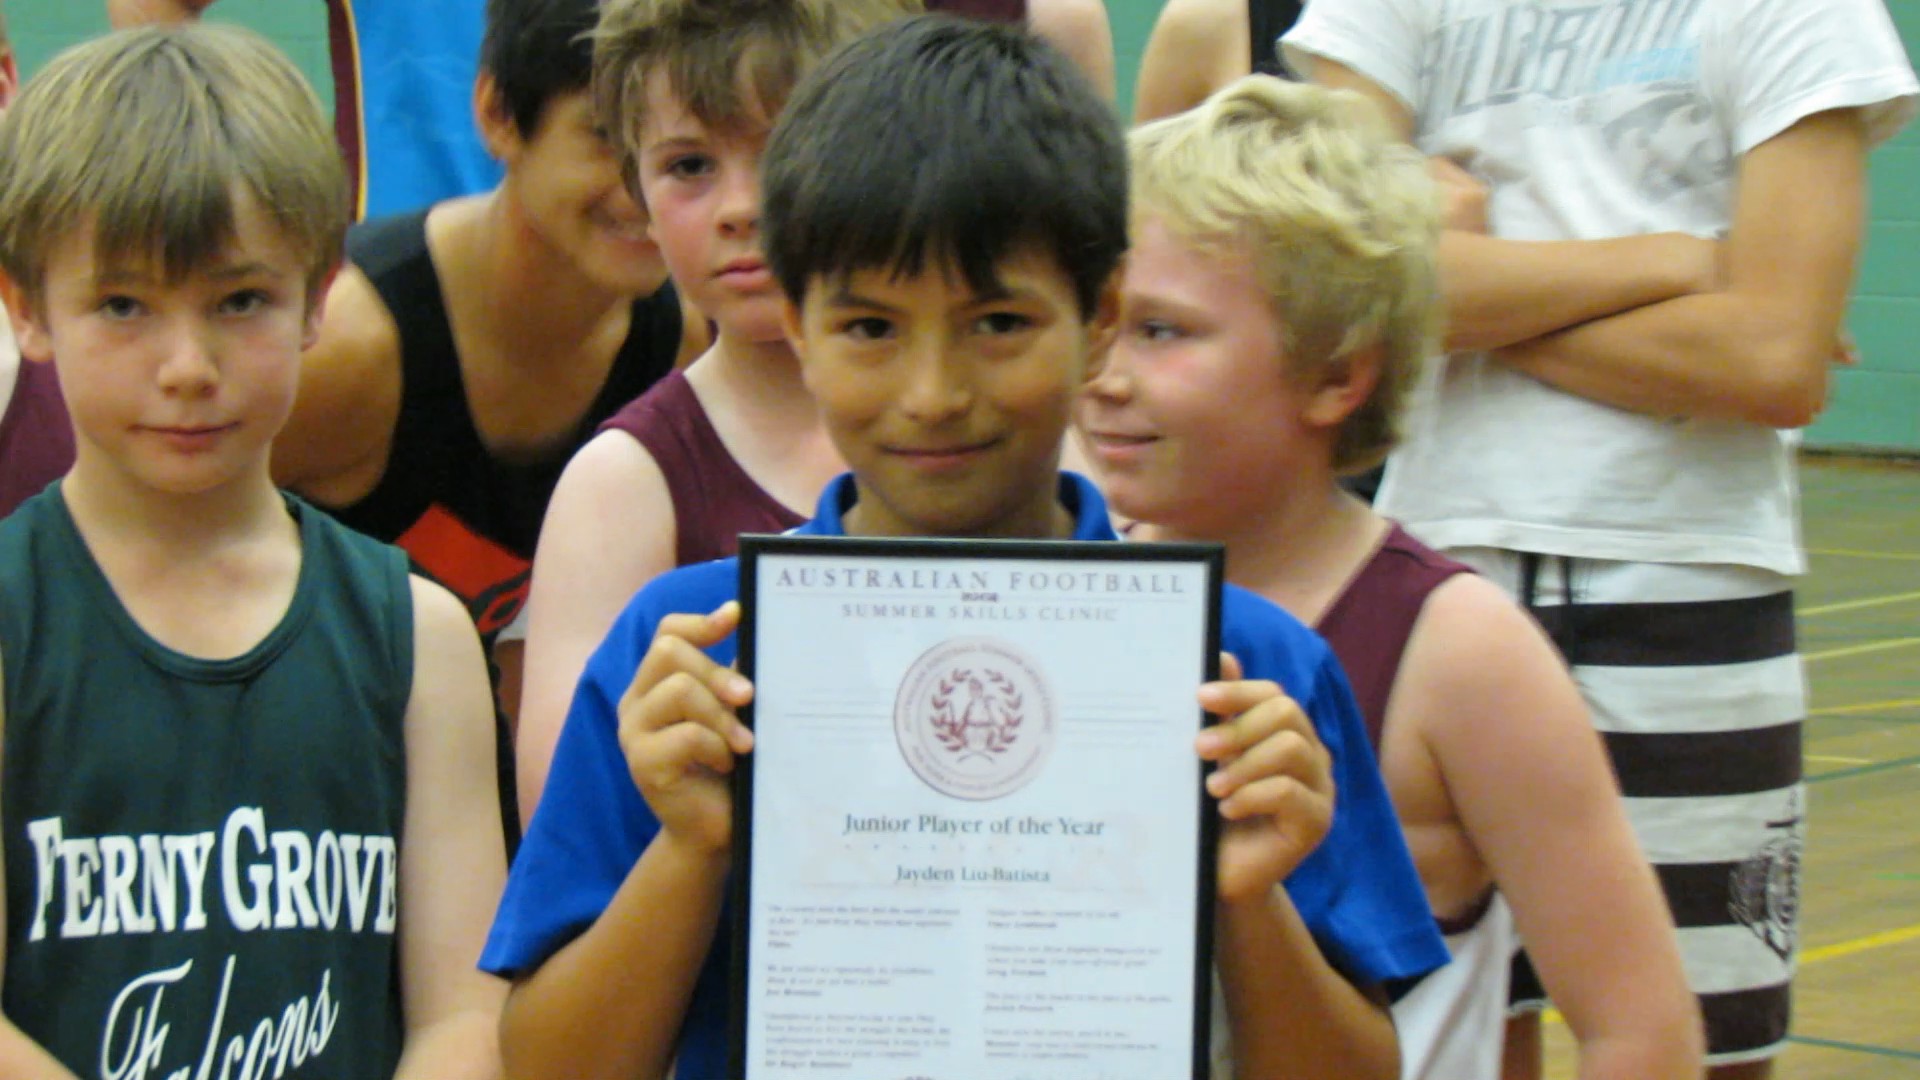 Junior Player of the Year Award Jayden Liu-Batista